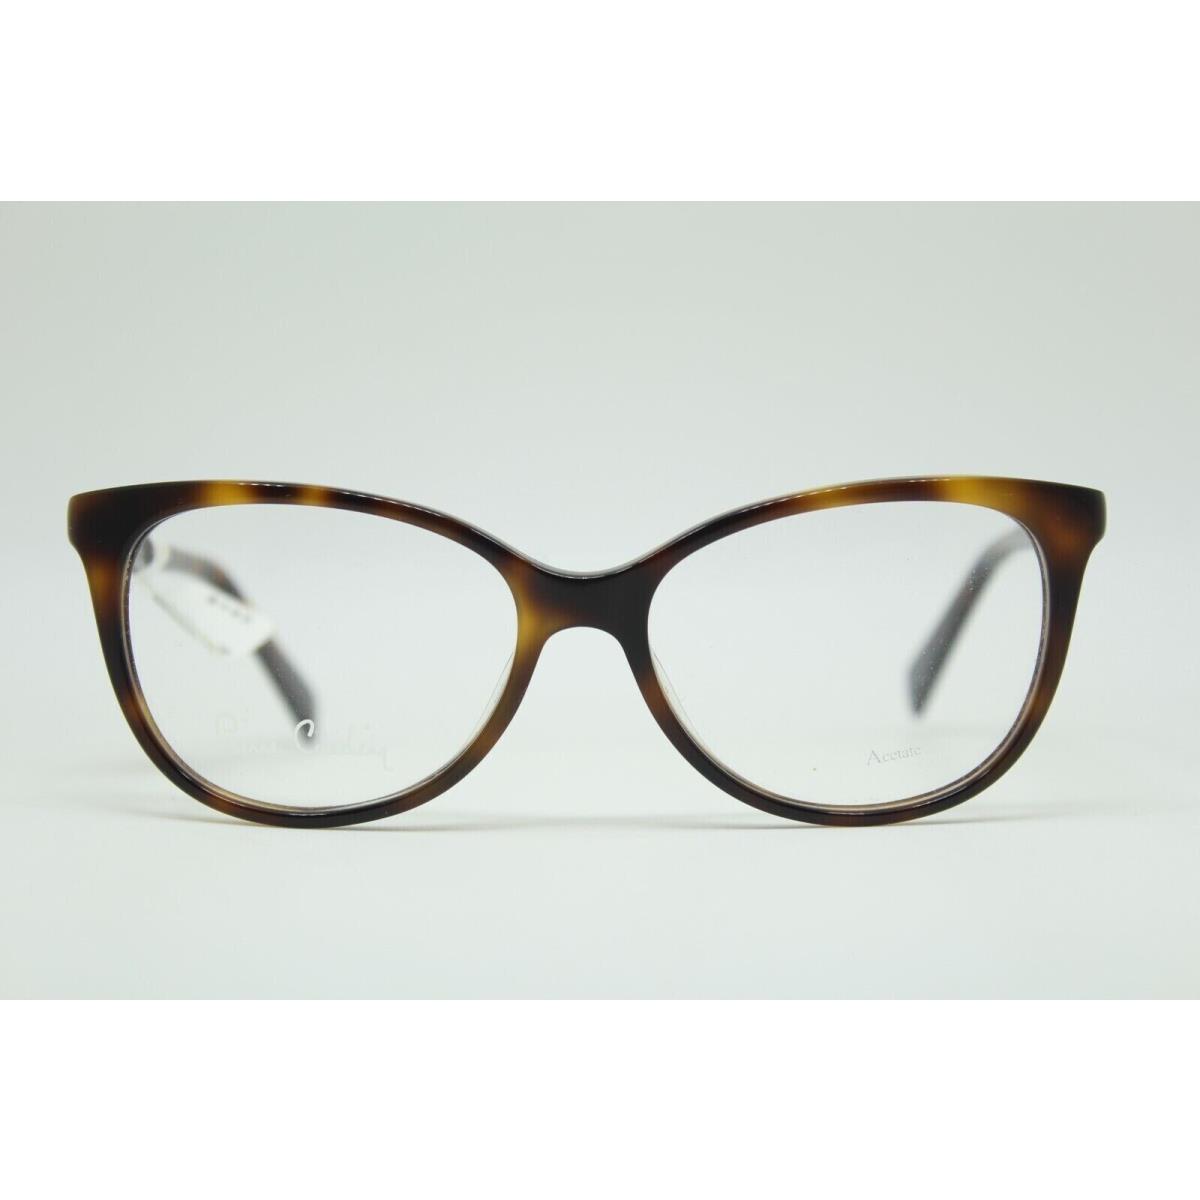 1 Unit Pierre Cardin Havana Eyeglass Frame 53-15-140 177